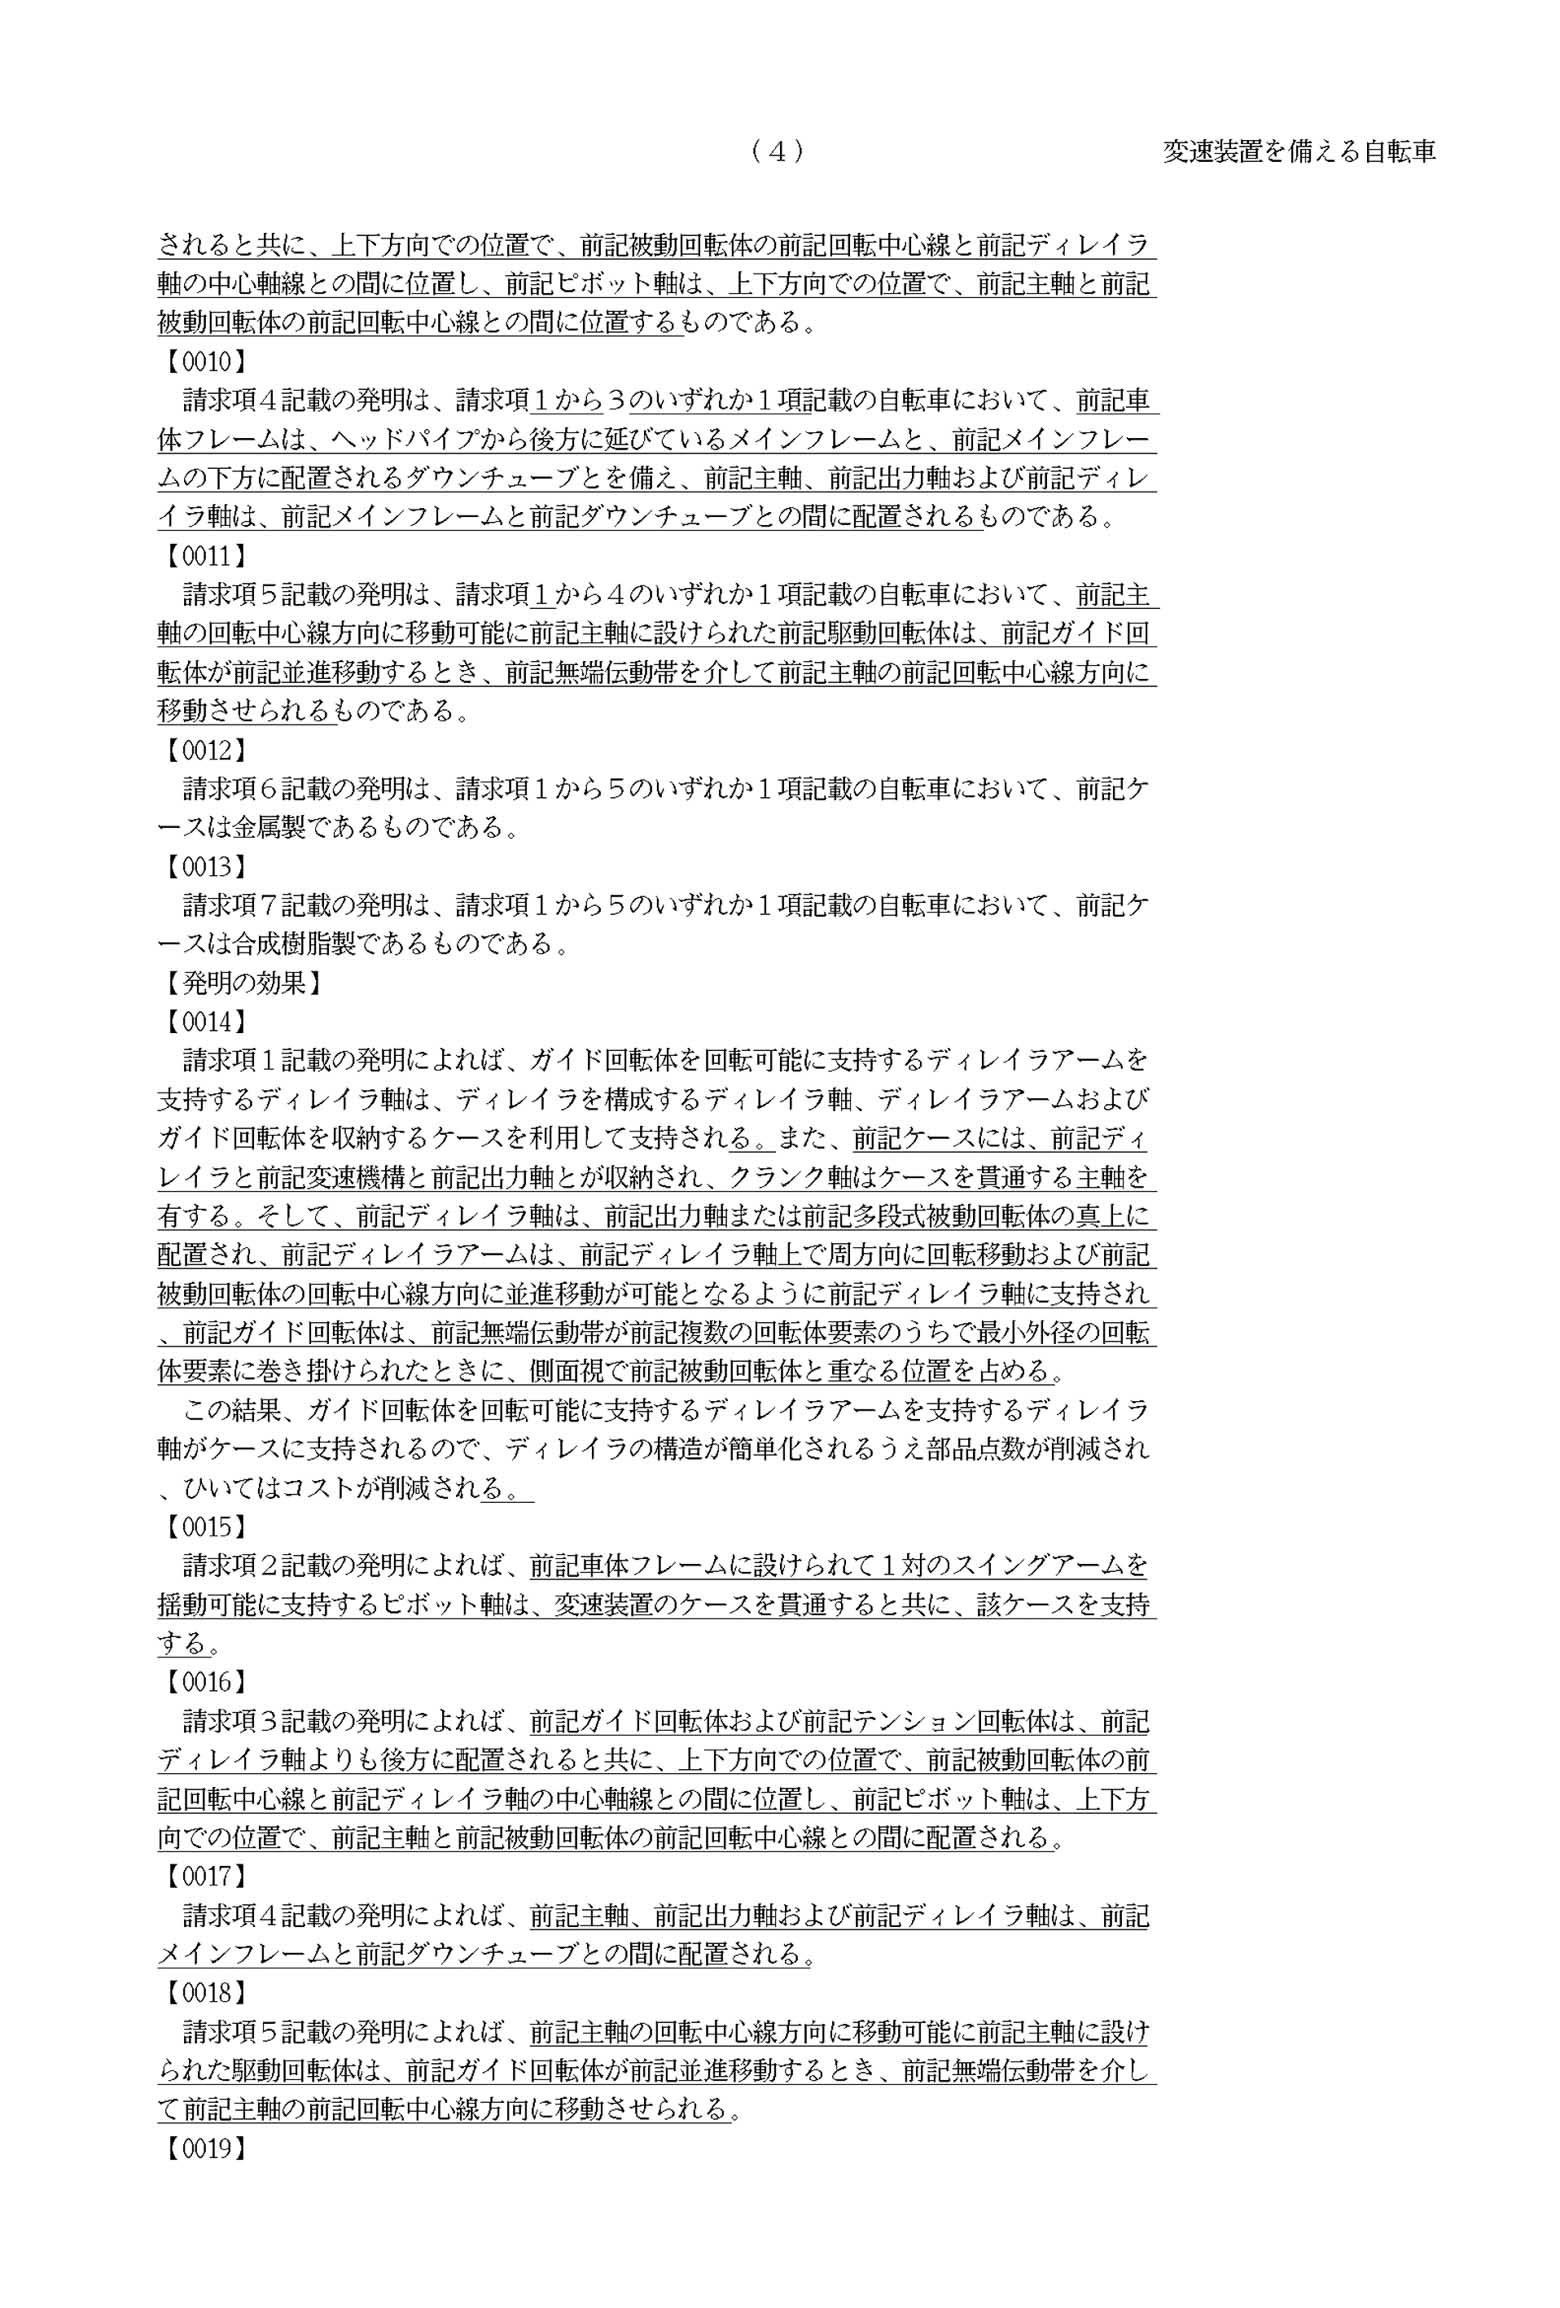 Japanese Patent 4260068 - Honda page 04 main image